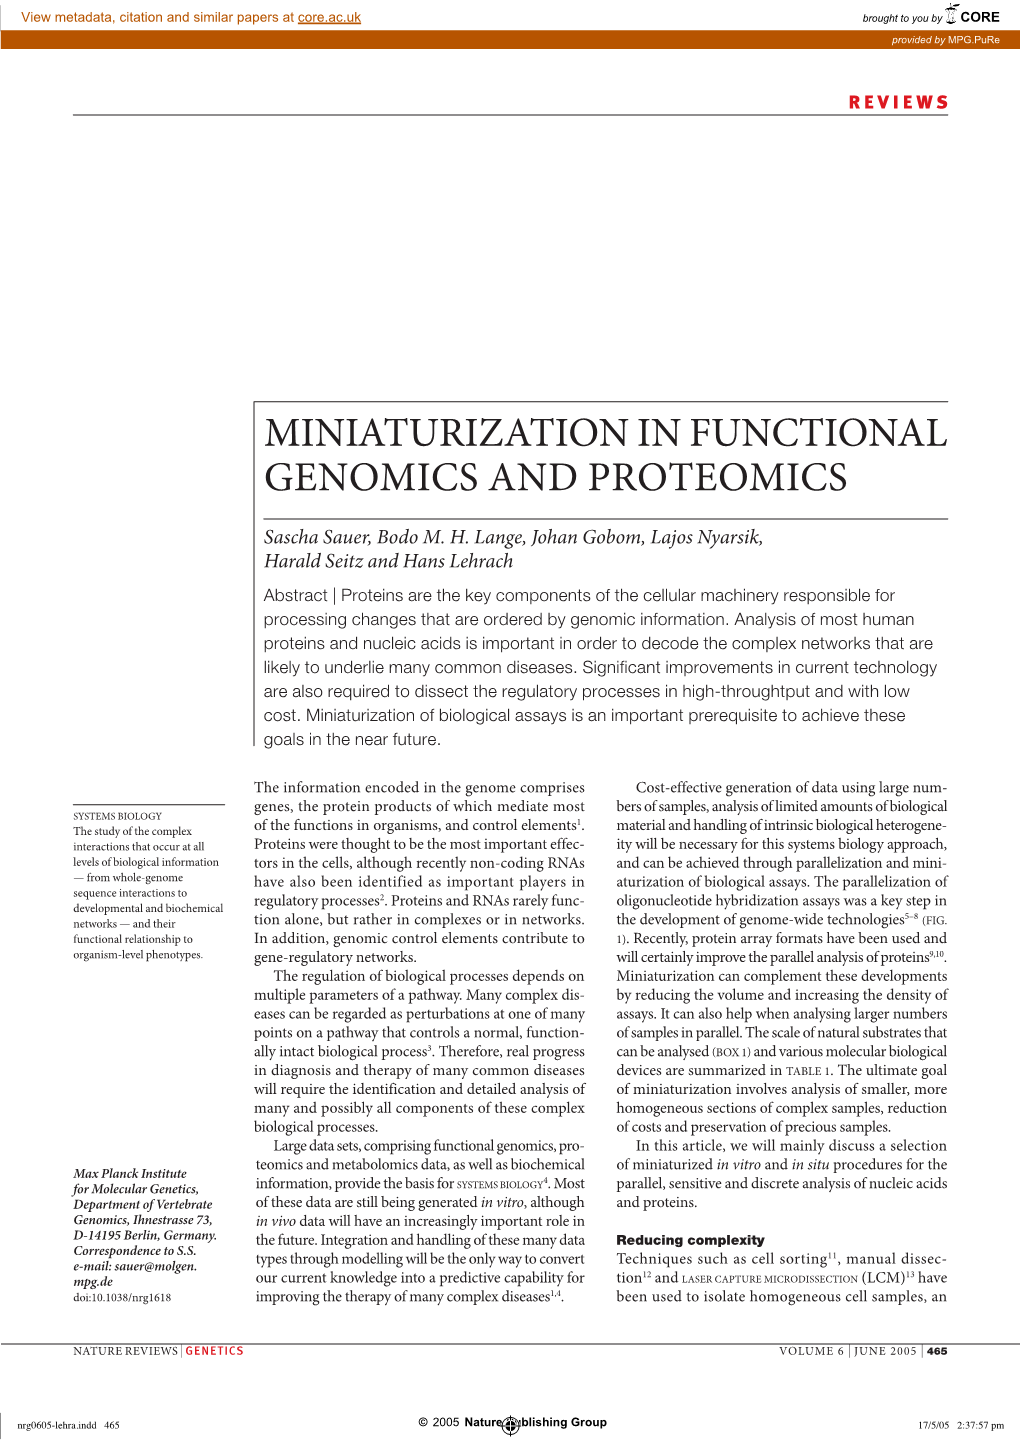 Miniaturization in Functional Genomics and Proteomics